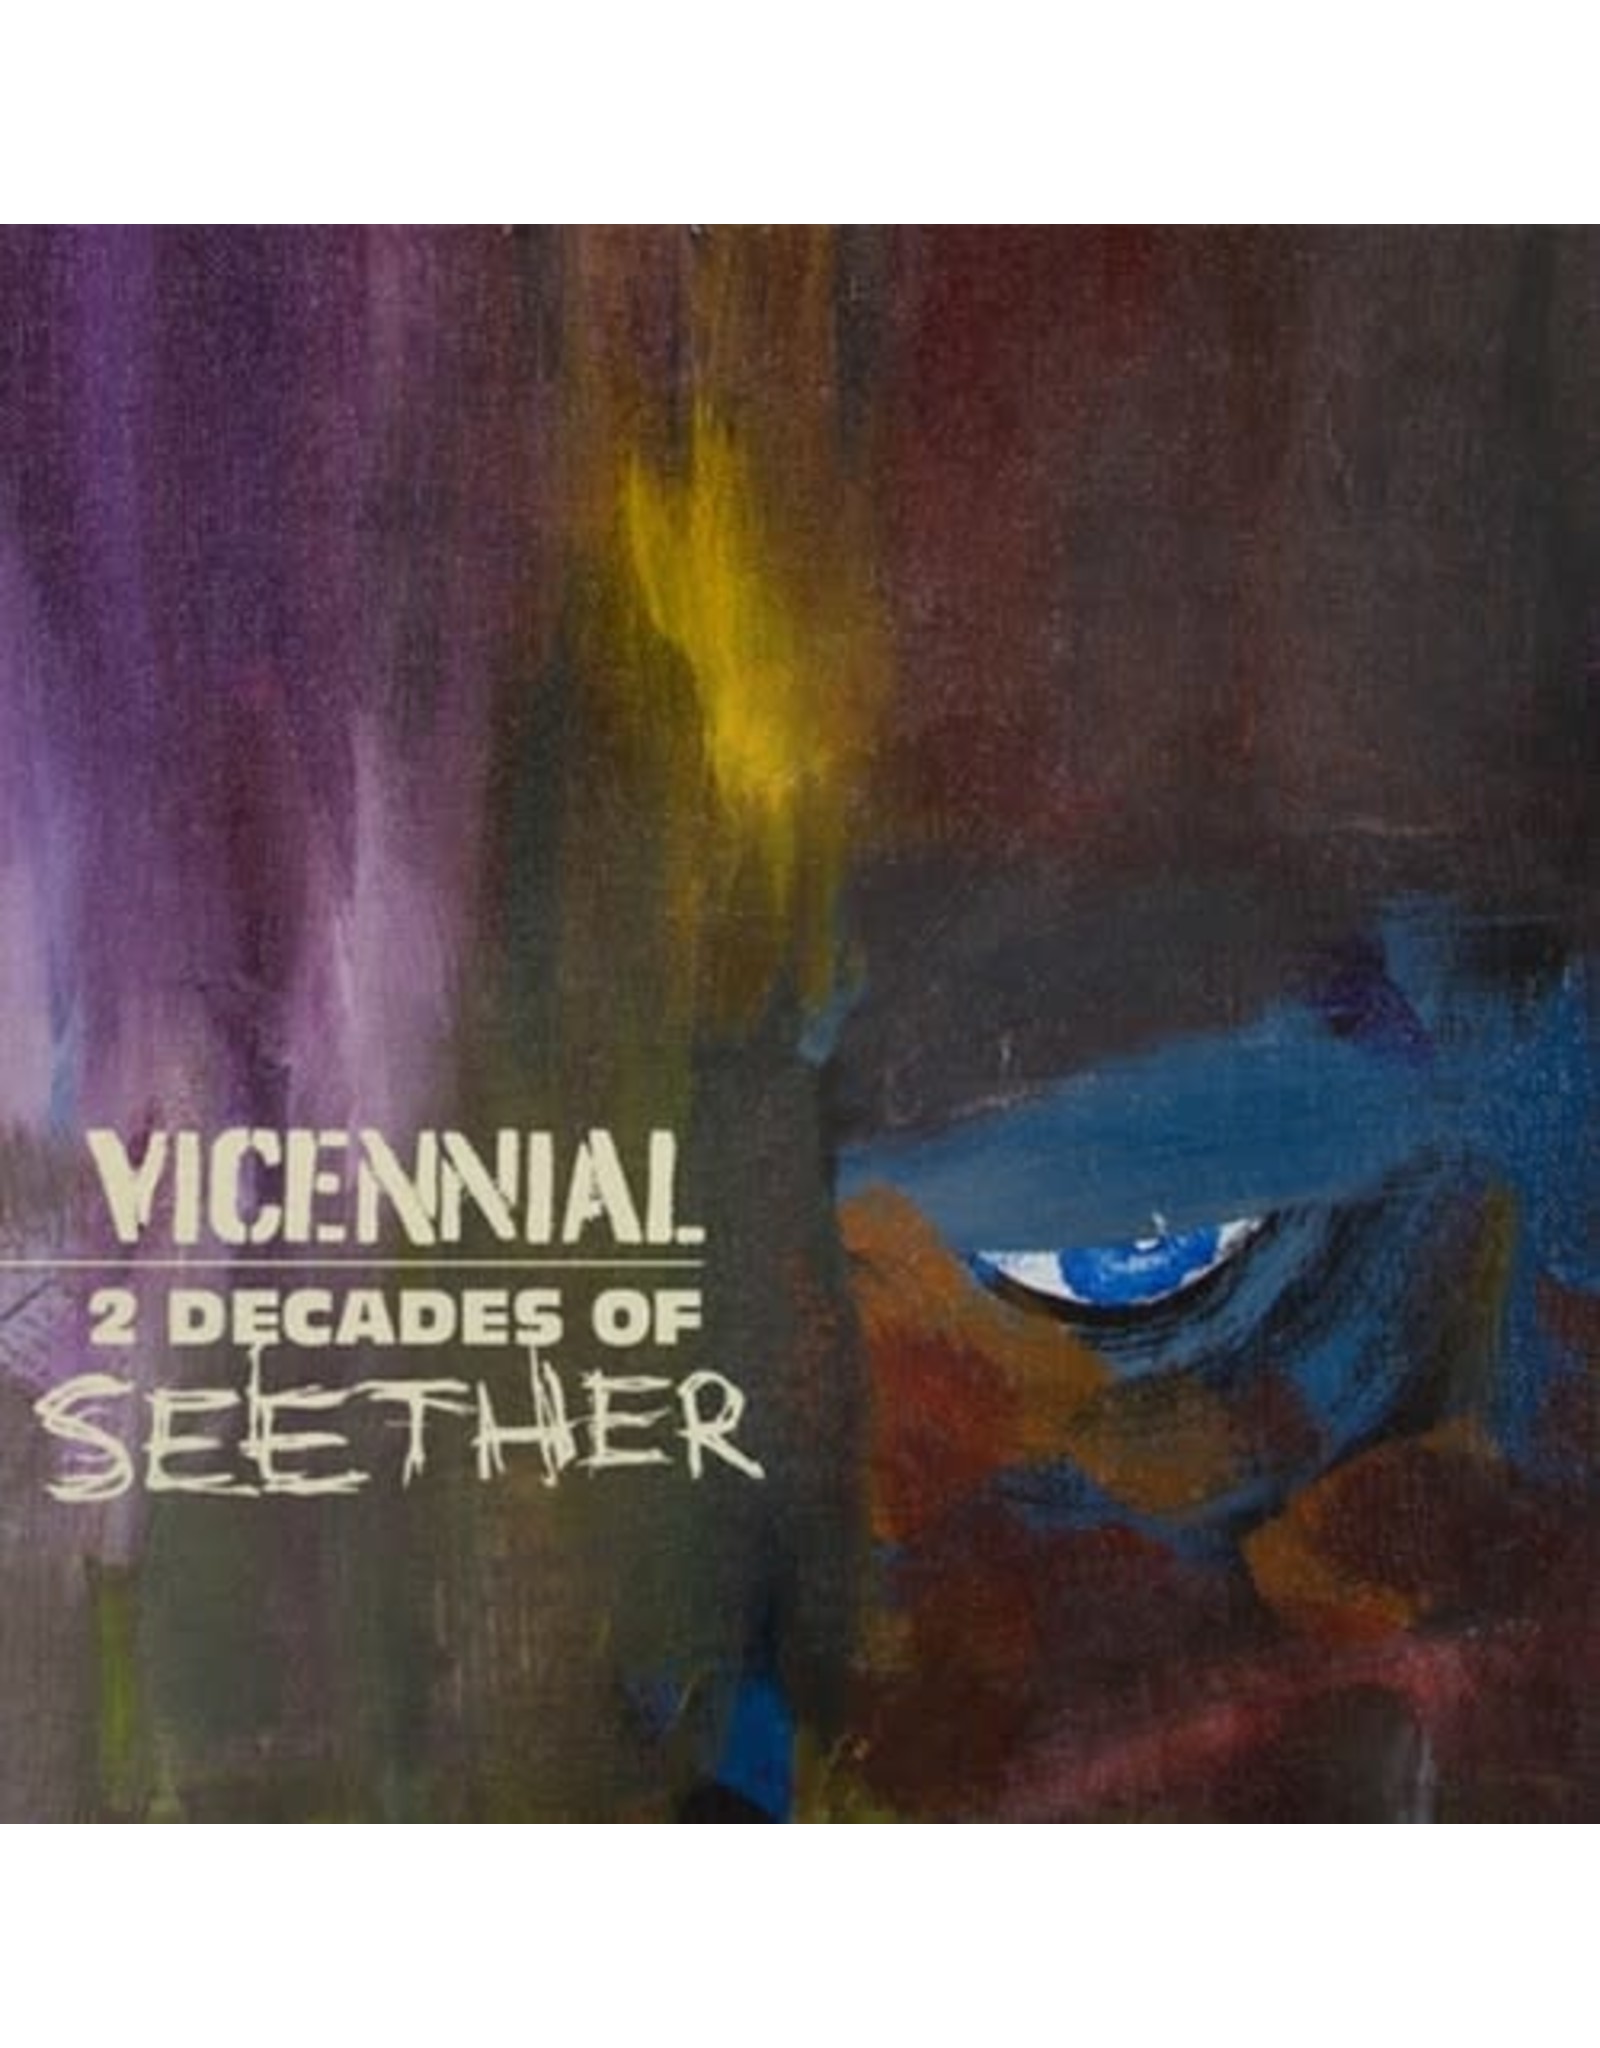 Seether - Vicennial: 2 Decades Of Seether (2LP/gatefold)